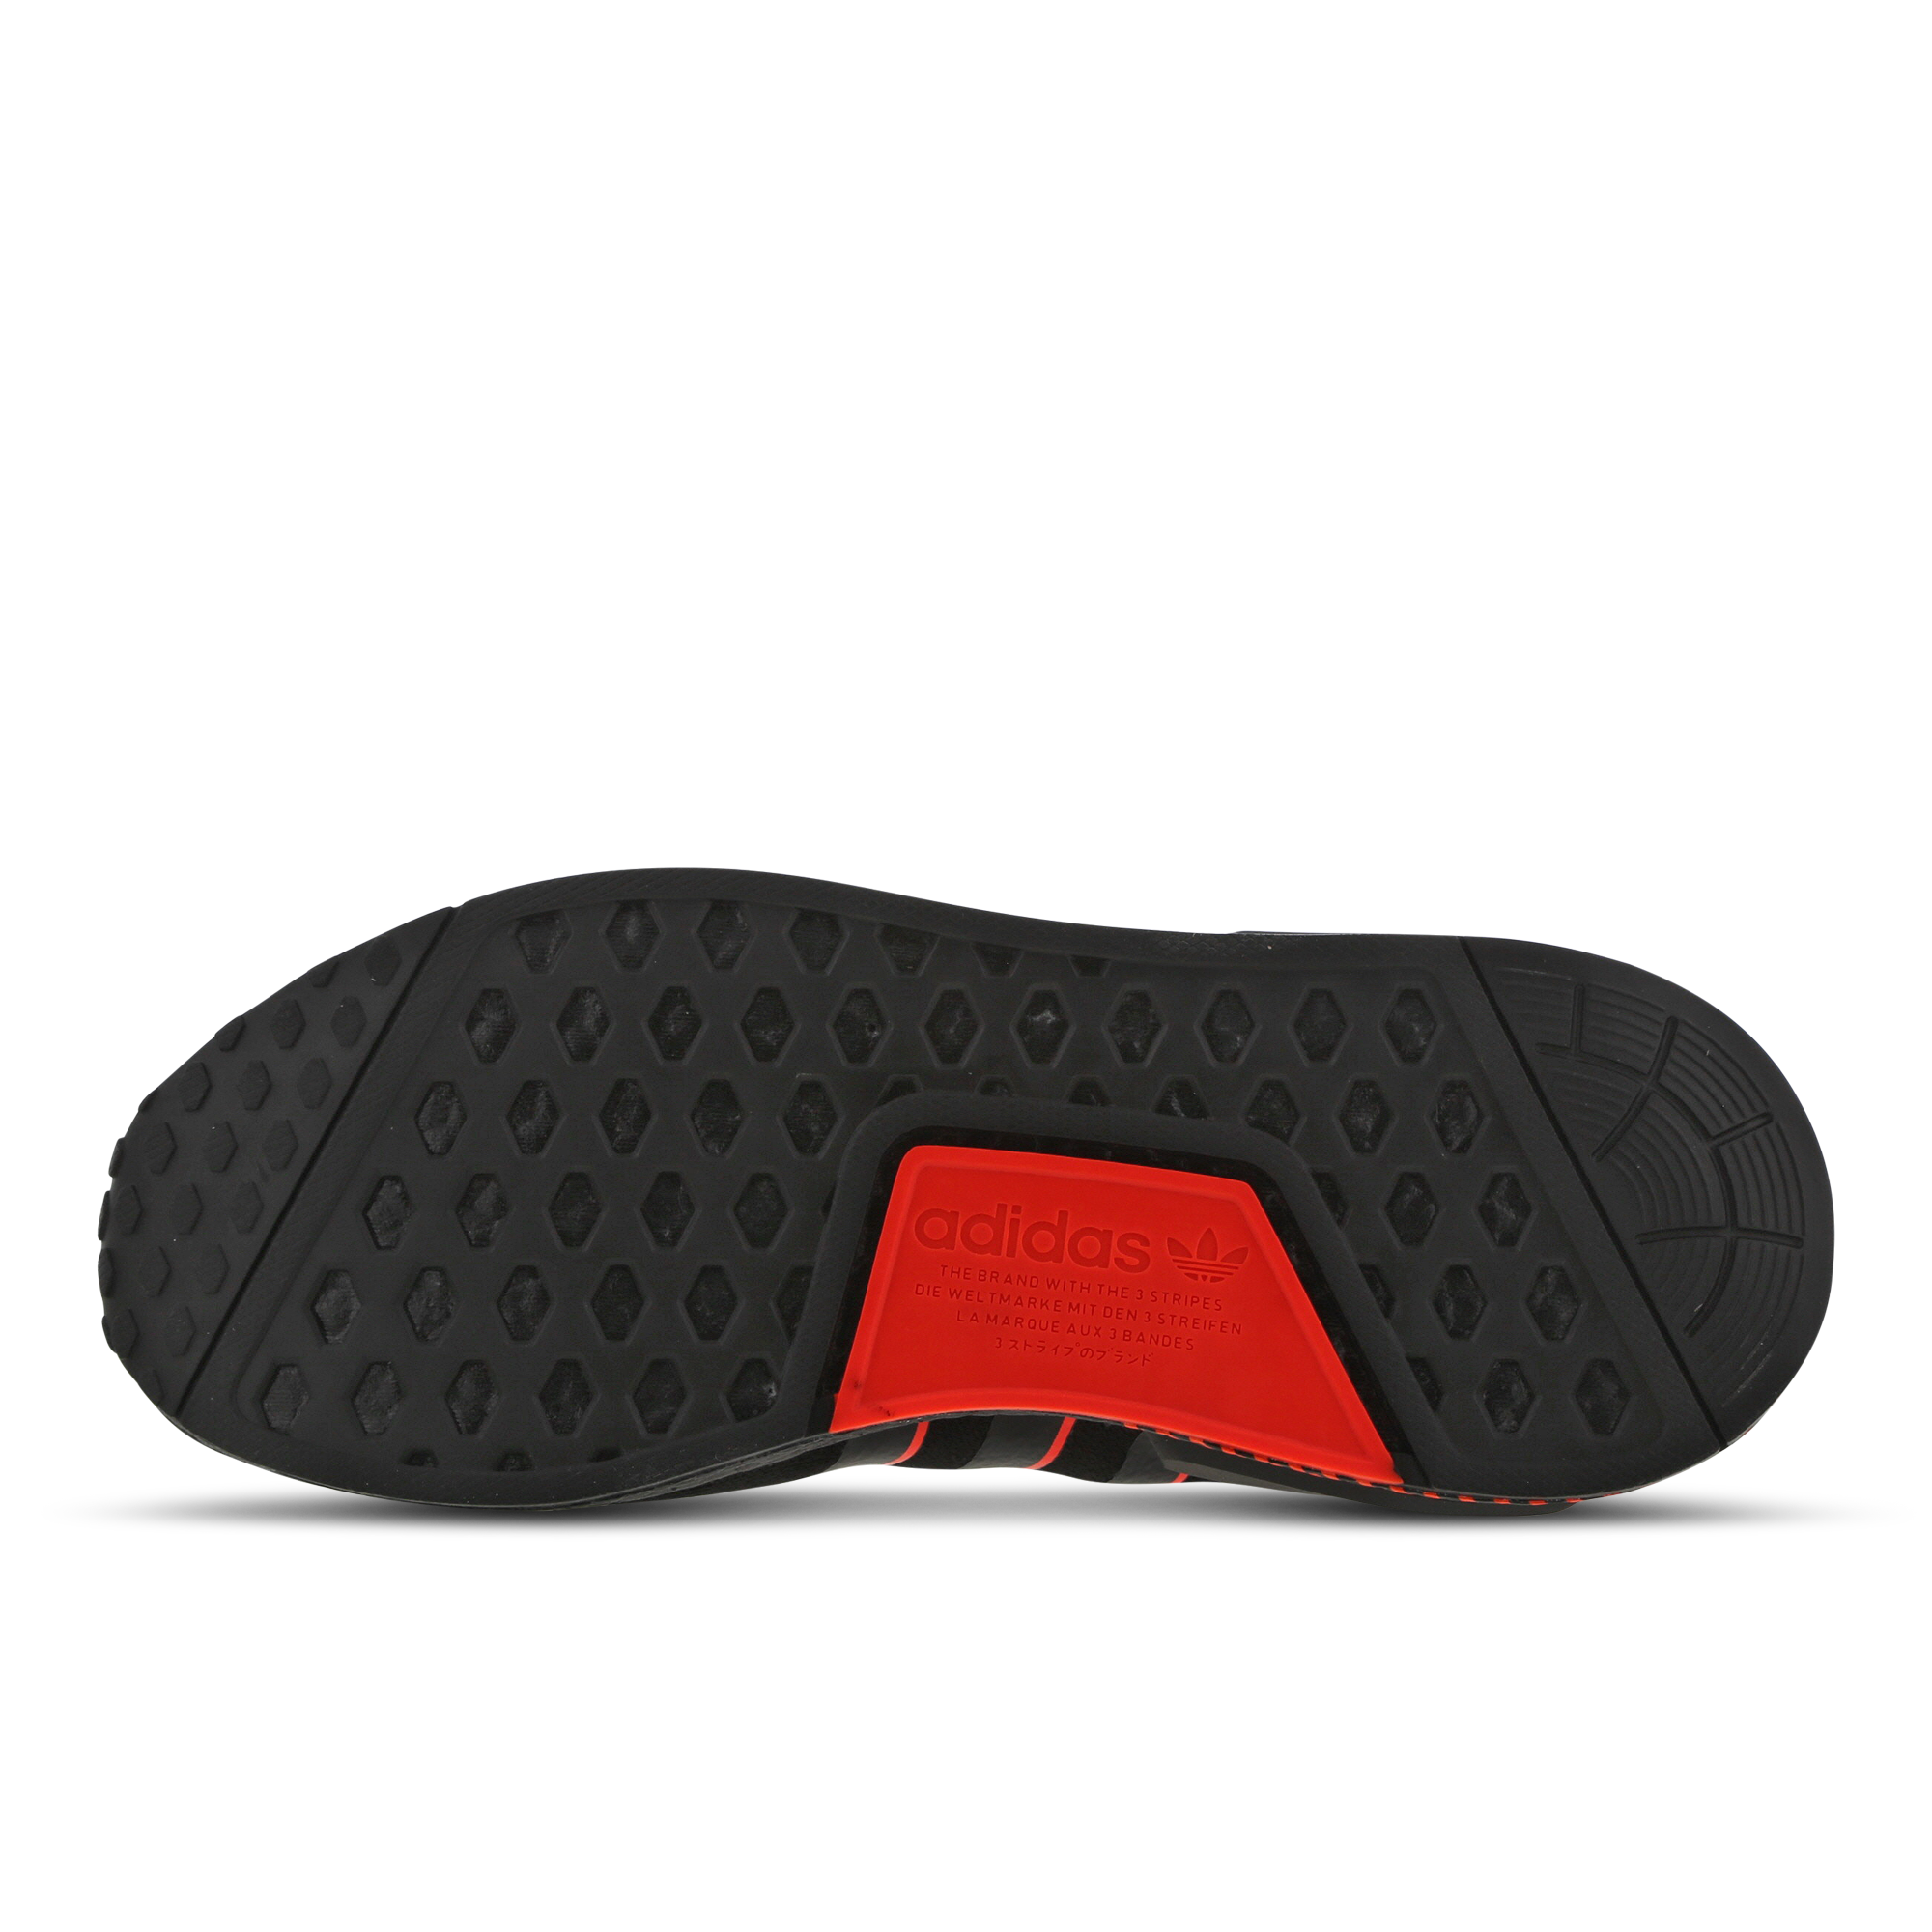 Adidas NMD R1 Black BY3123 SneakerNewscom